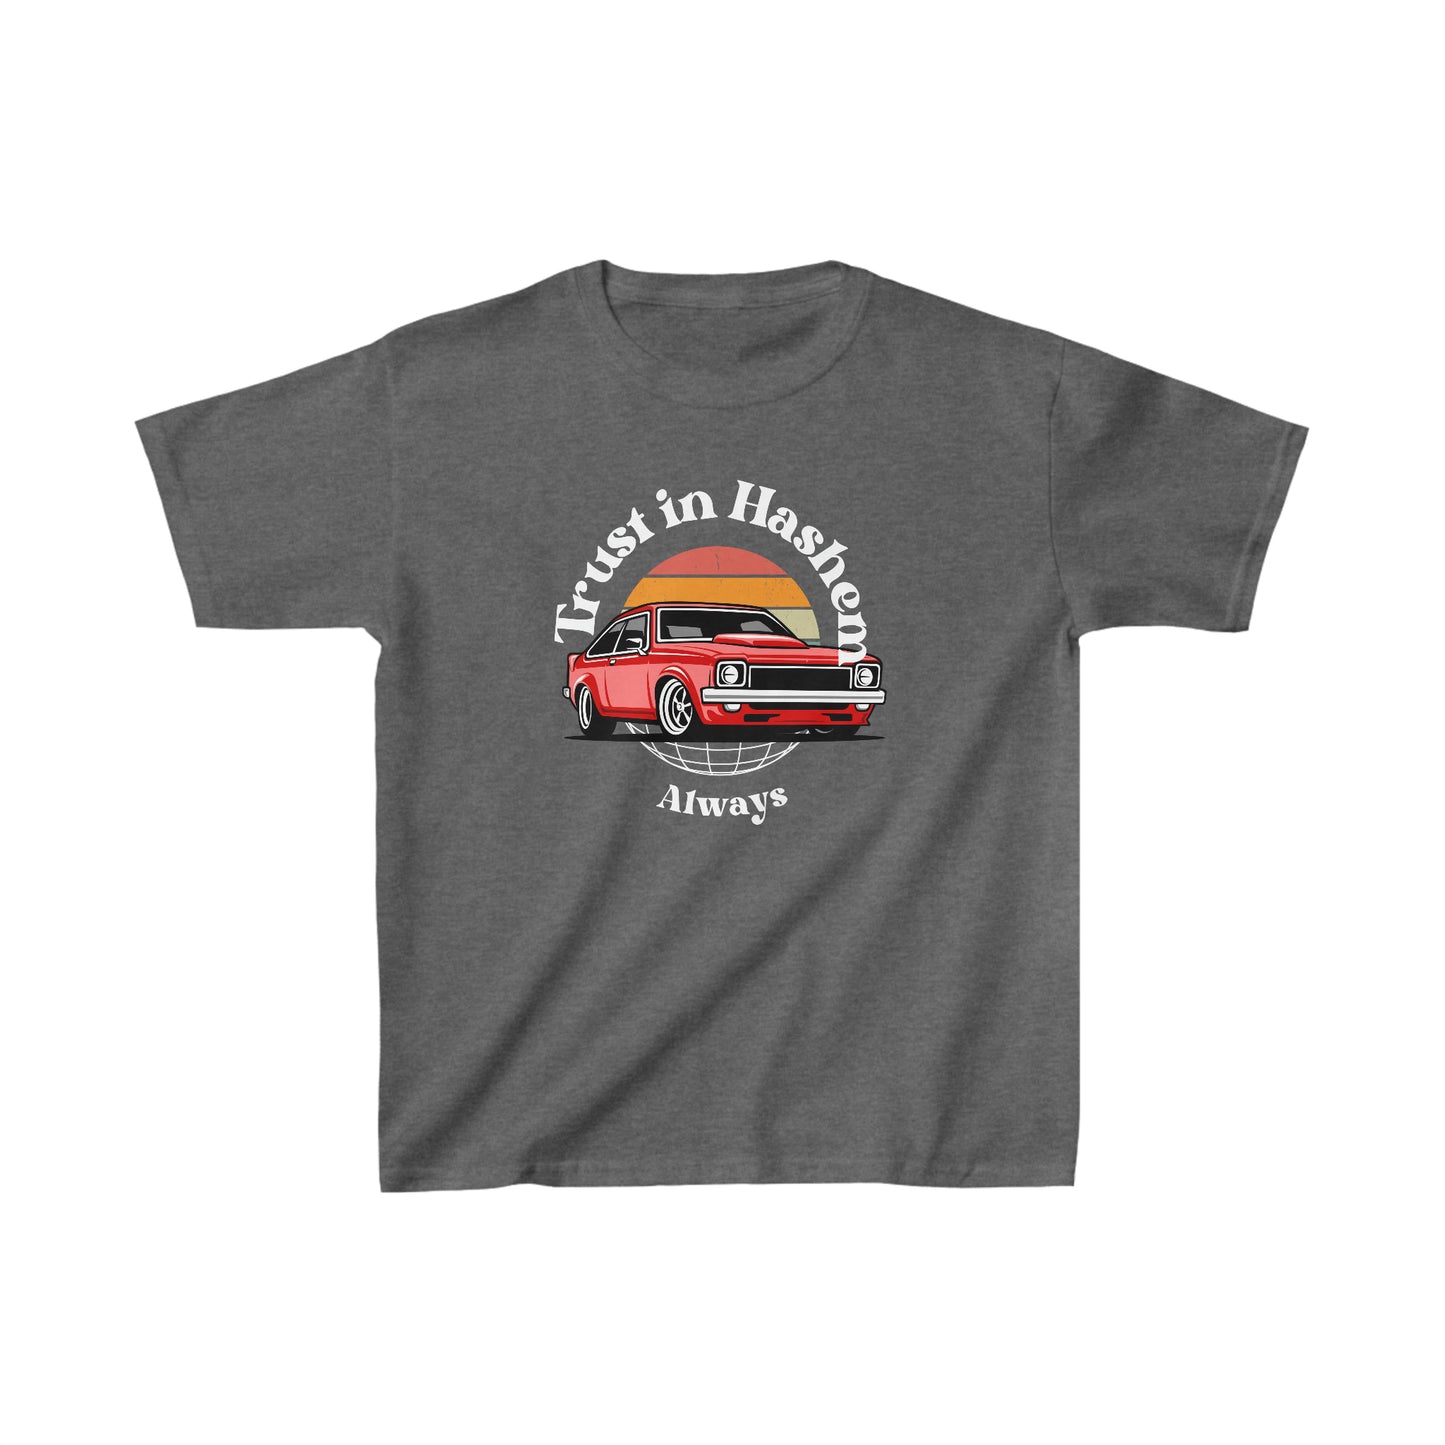 Kids' Trust in Hashem Car short sleeve t-shirt